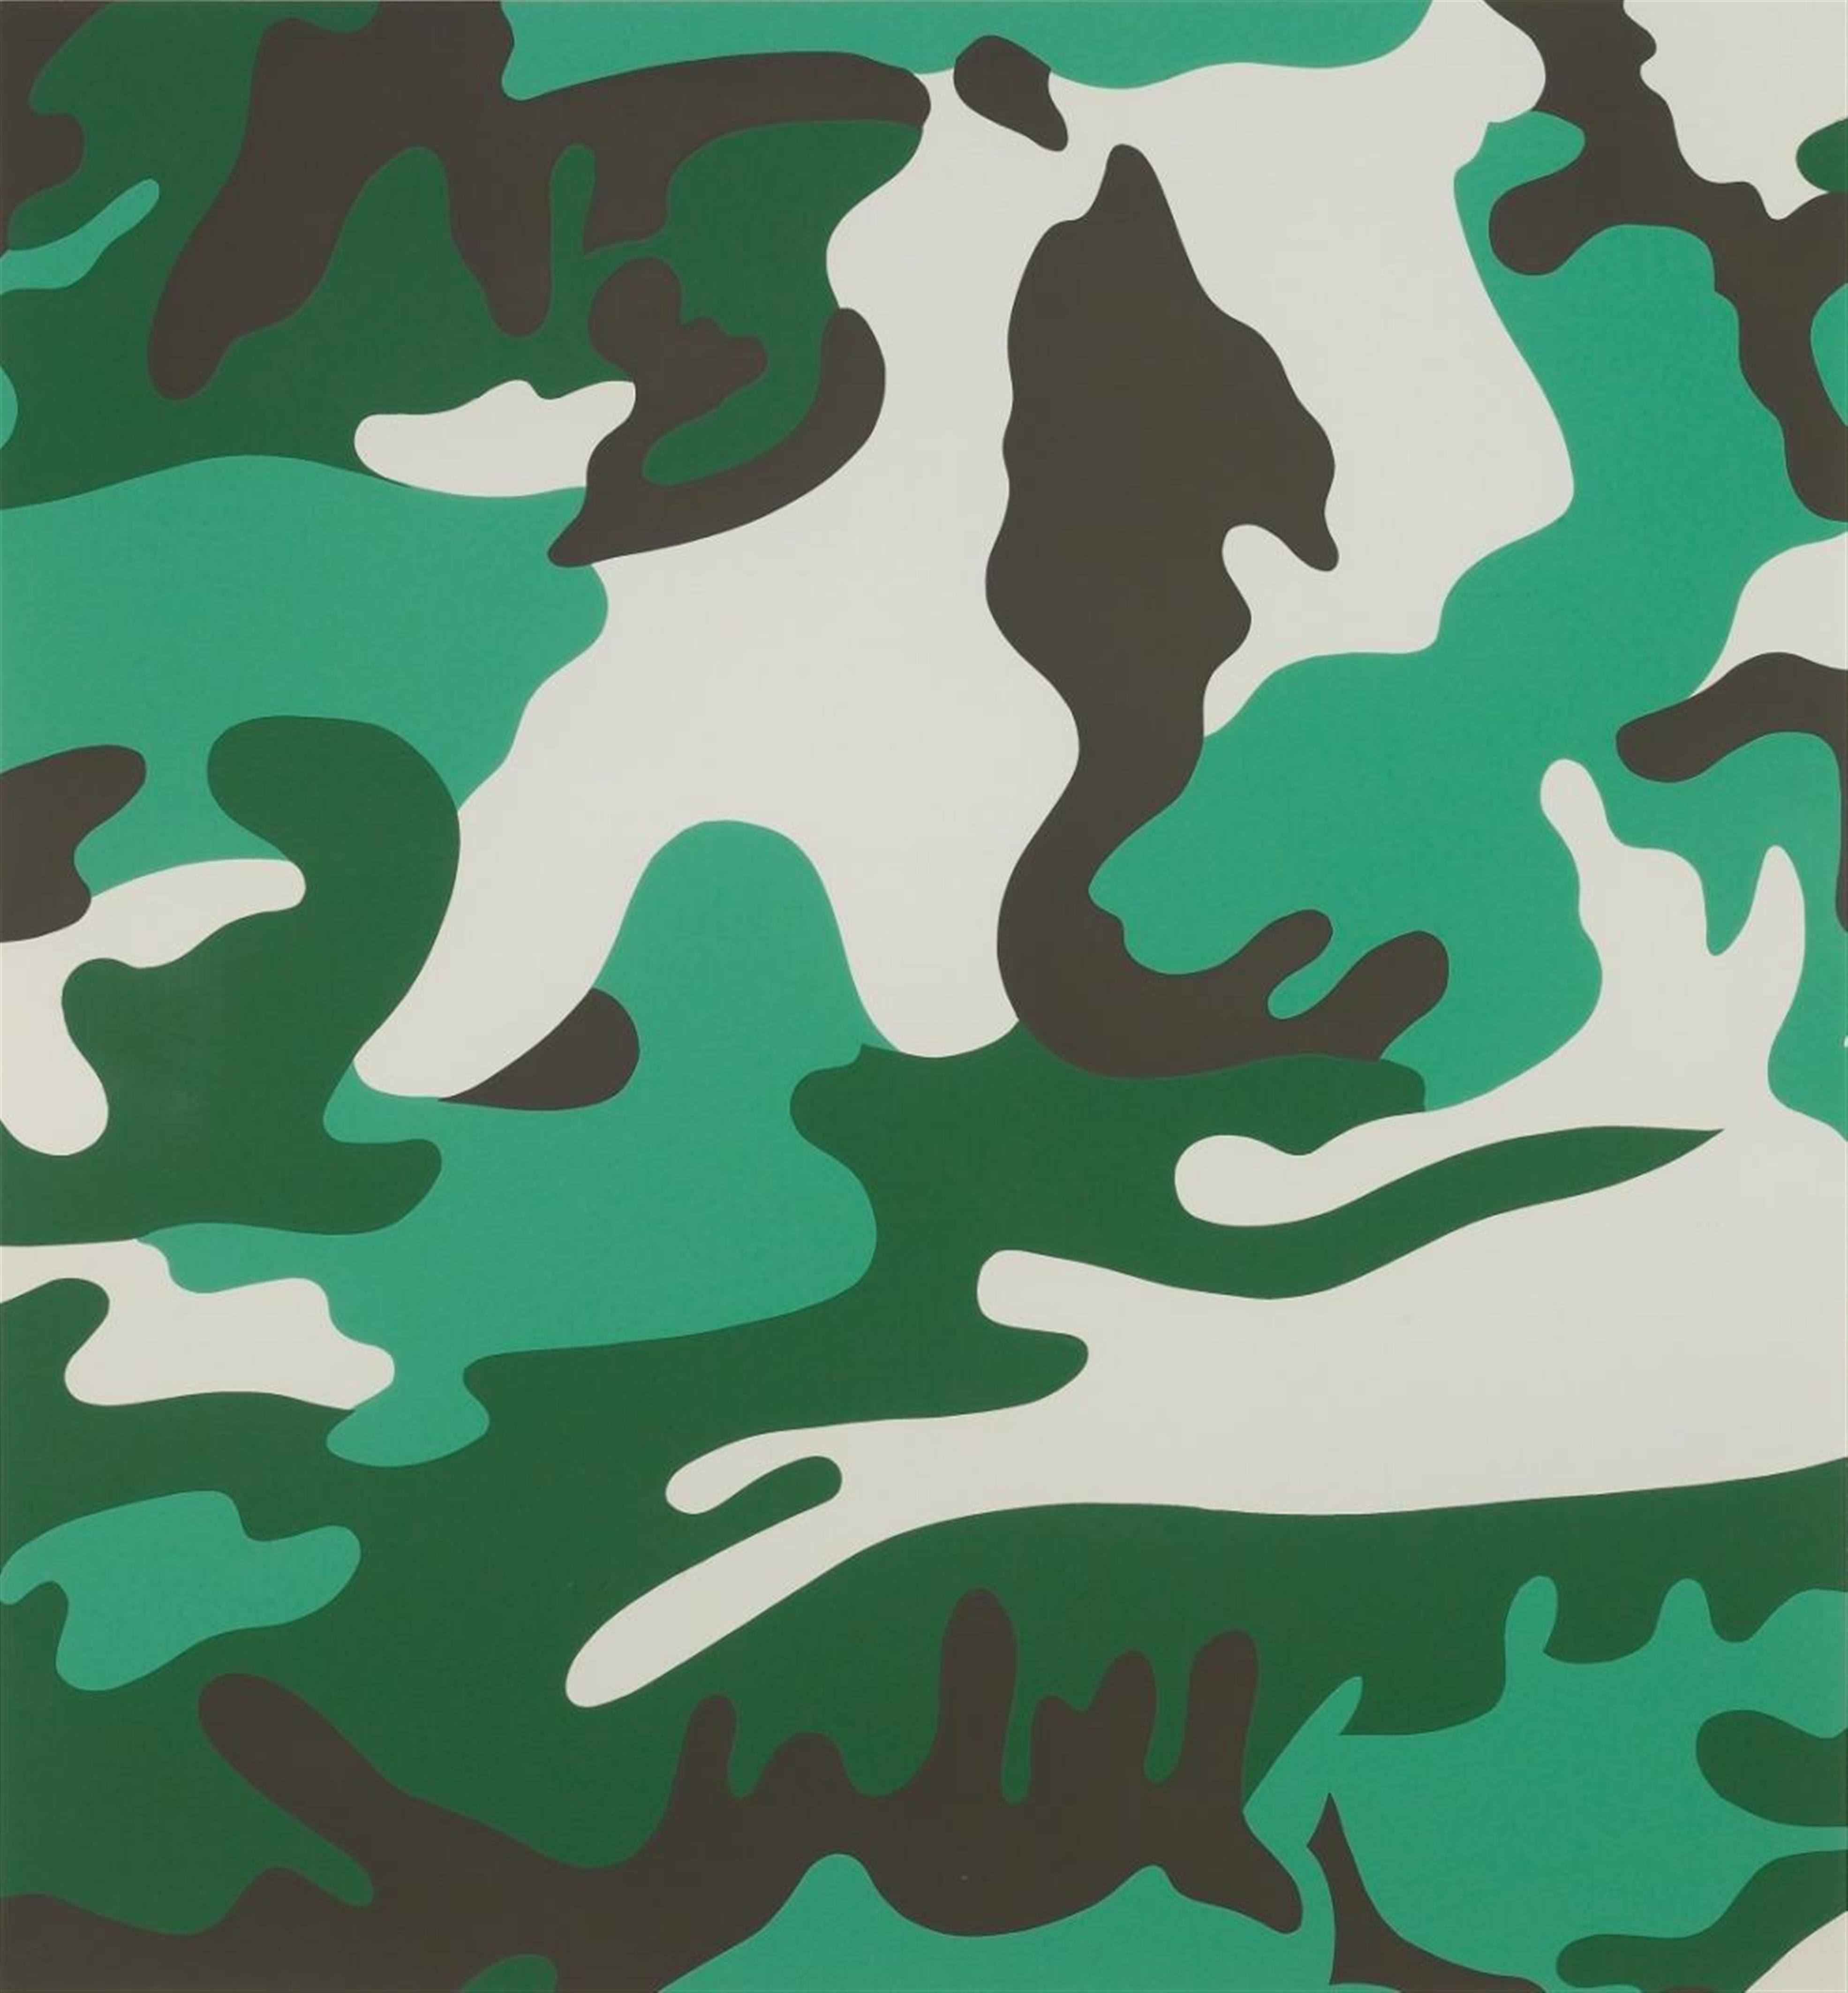 Andy Warhol - Camouflage - image-1